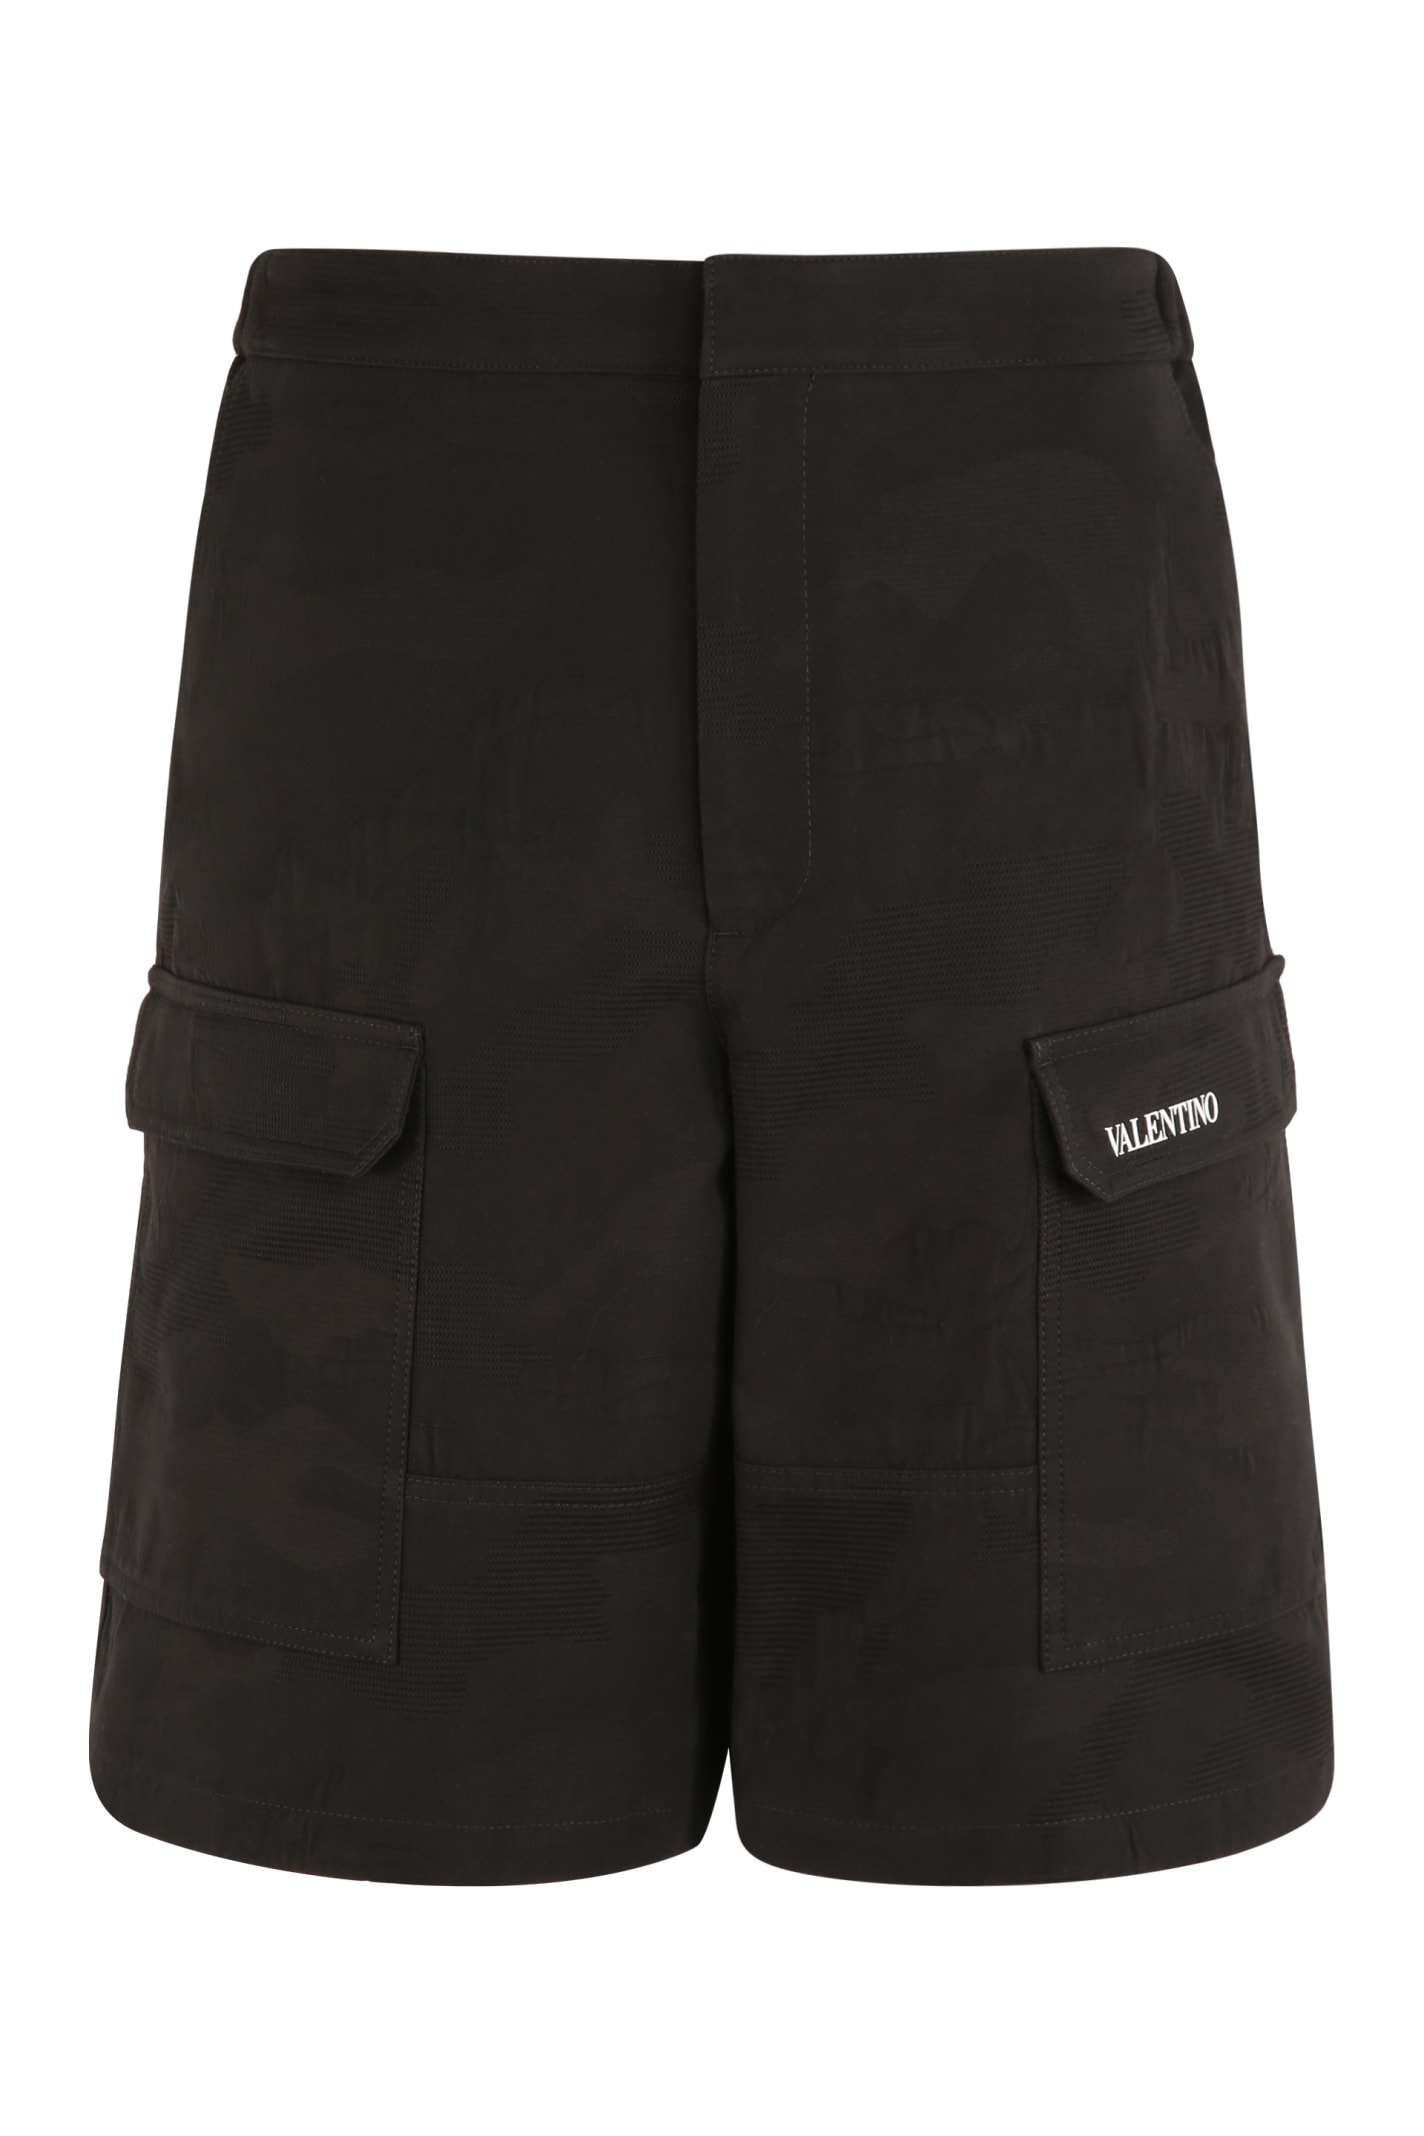 Valentino Cotton Cargo Bermuda Shorts